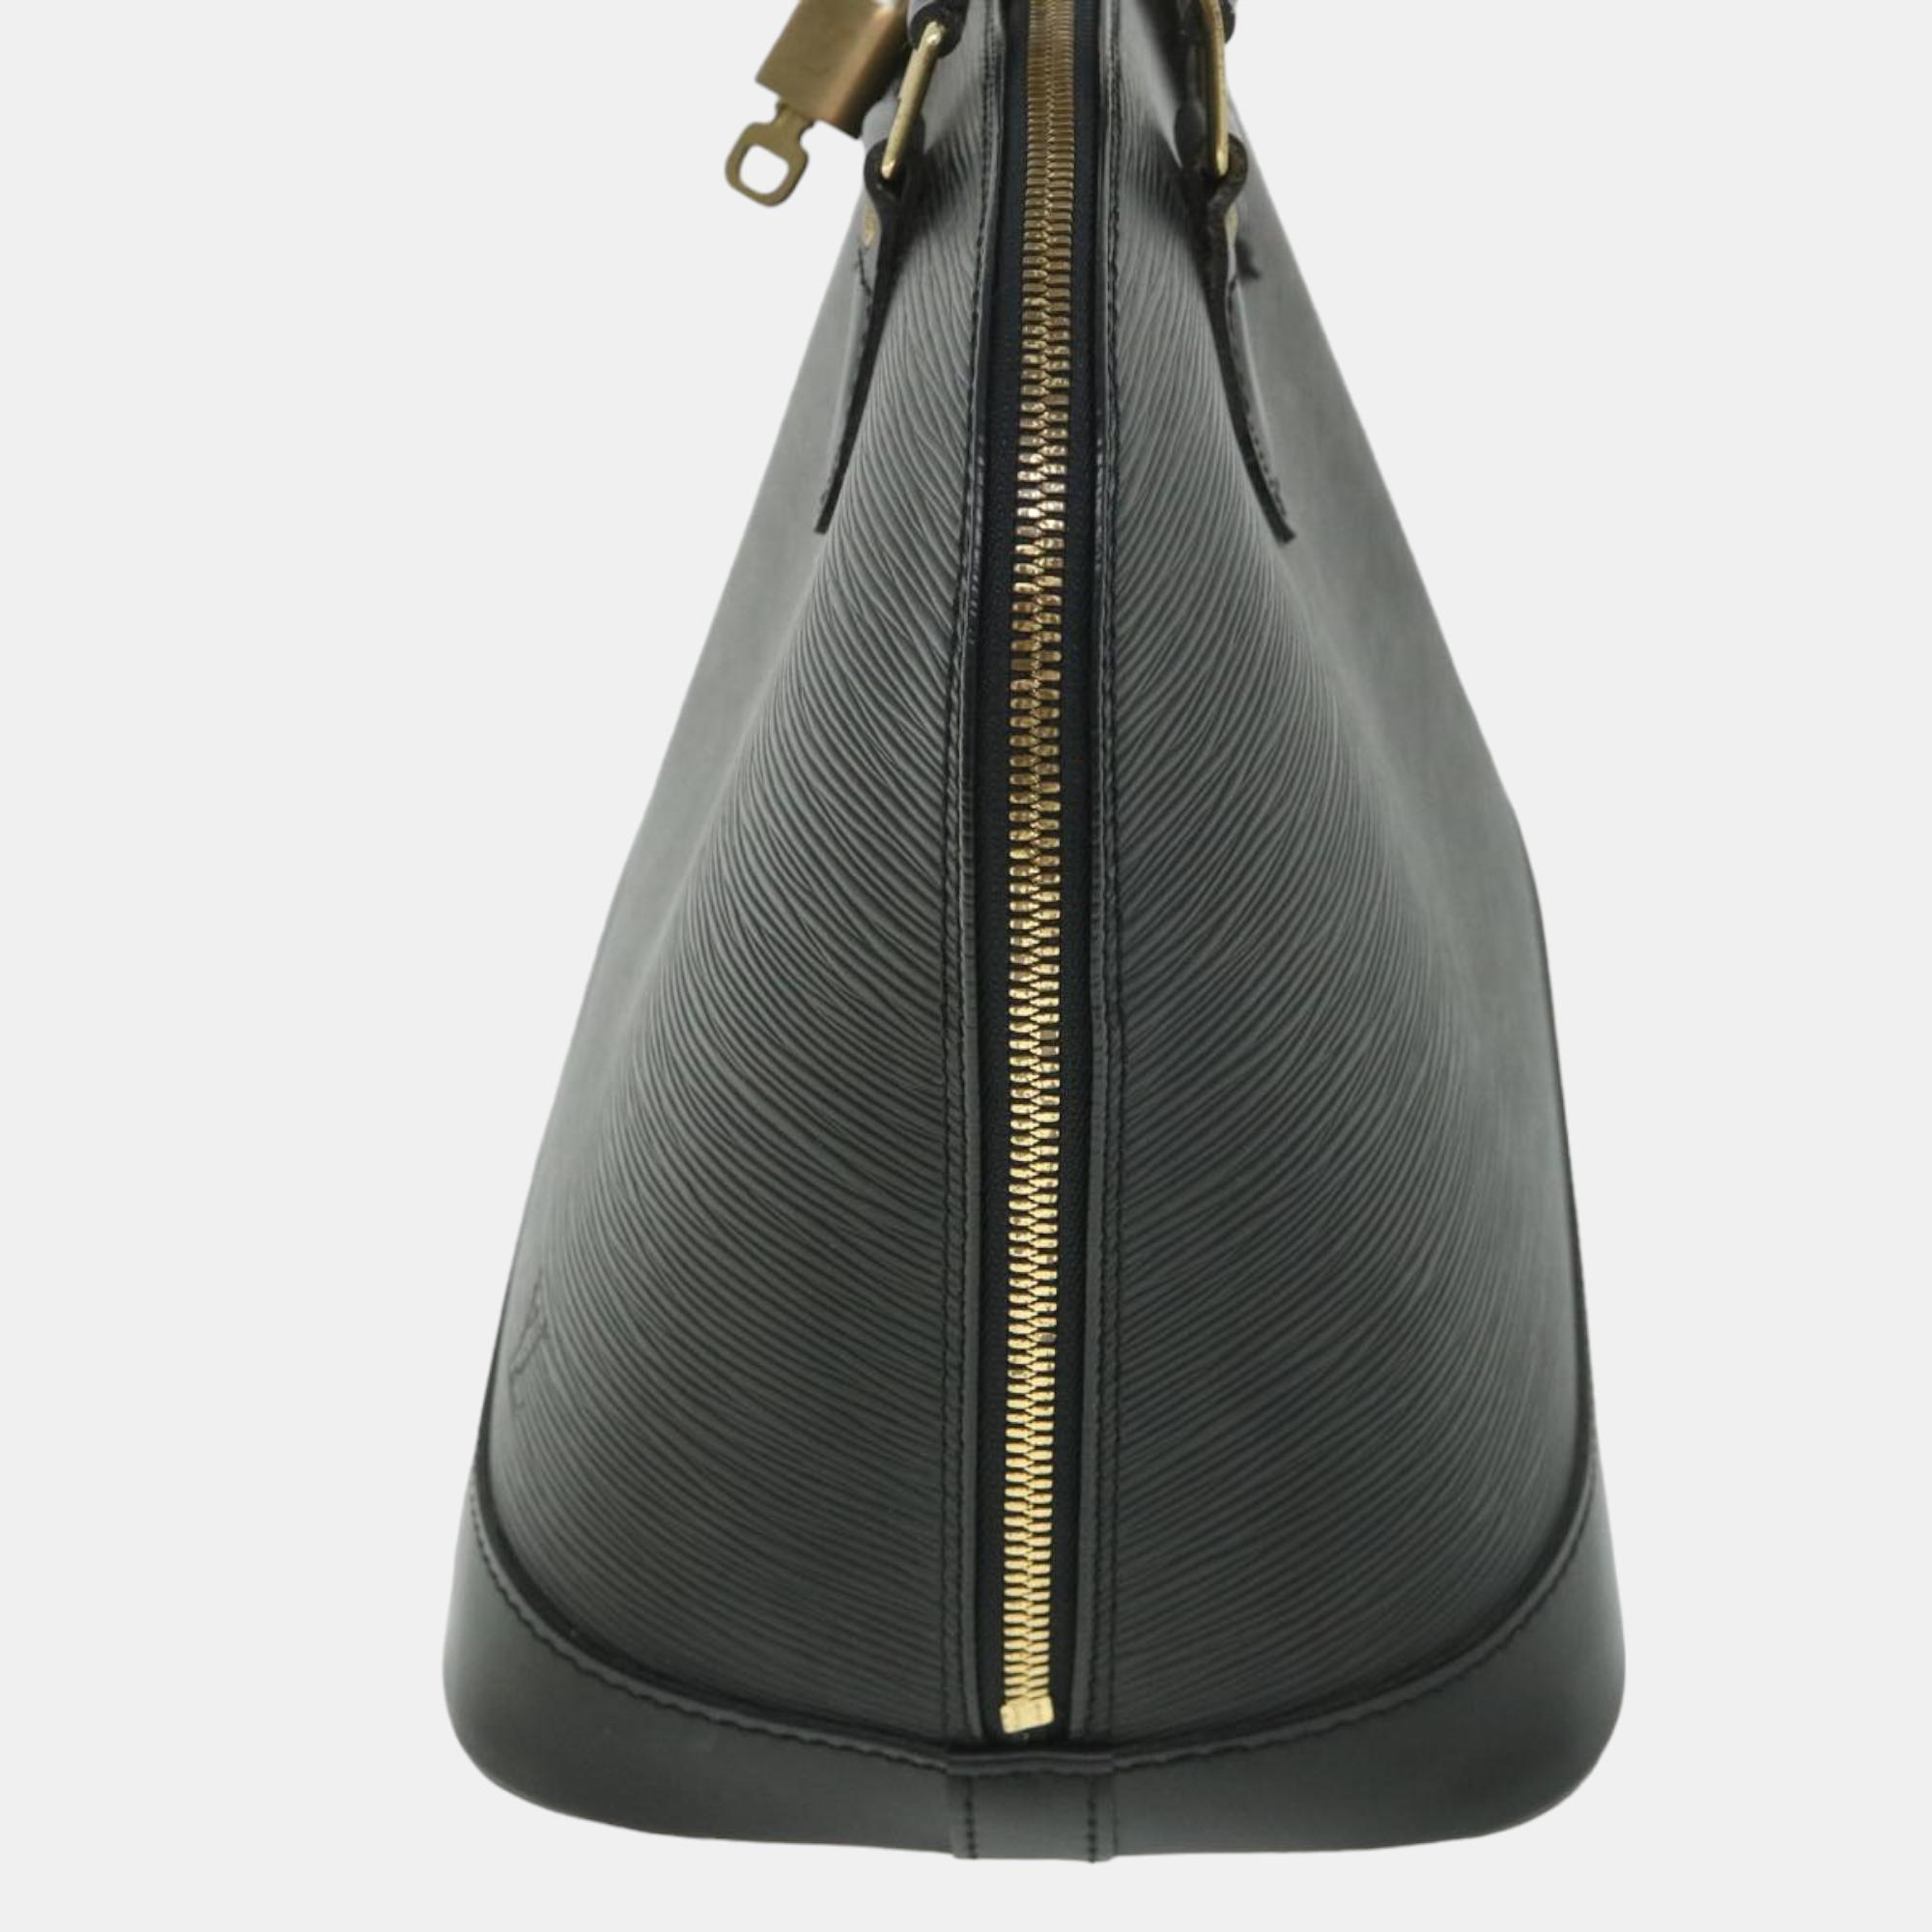 

Louis Vuitton Black Epi Leather Alma PM Satchel